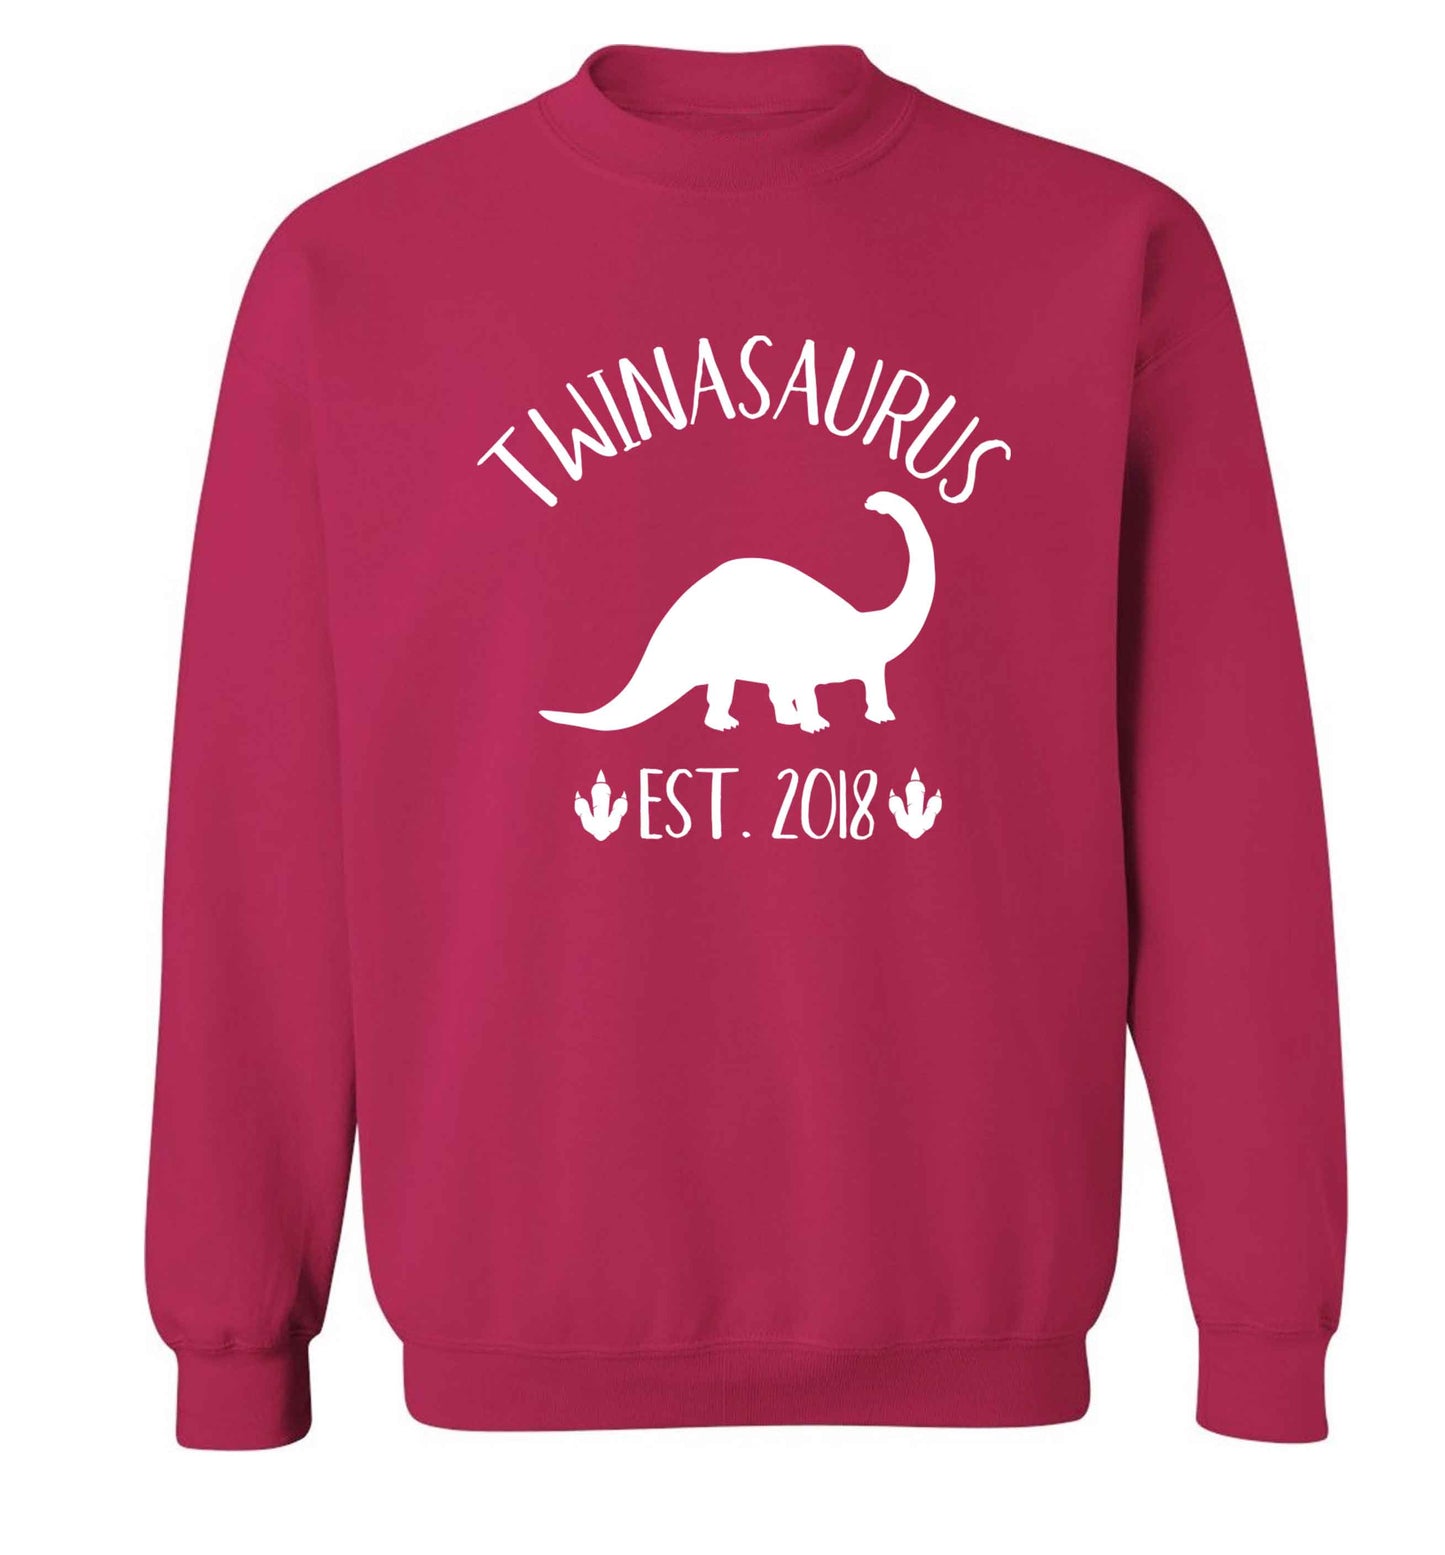 Personalised twinasaurus since (custom date) Adult's unisex pink Sweater 2XL